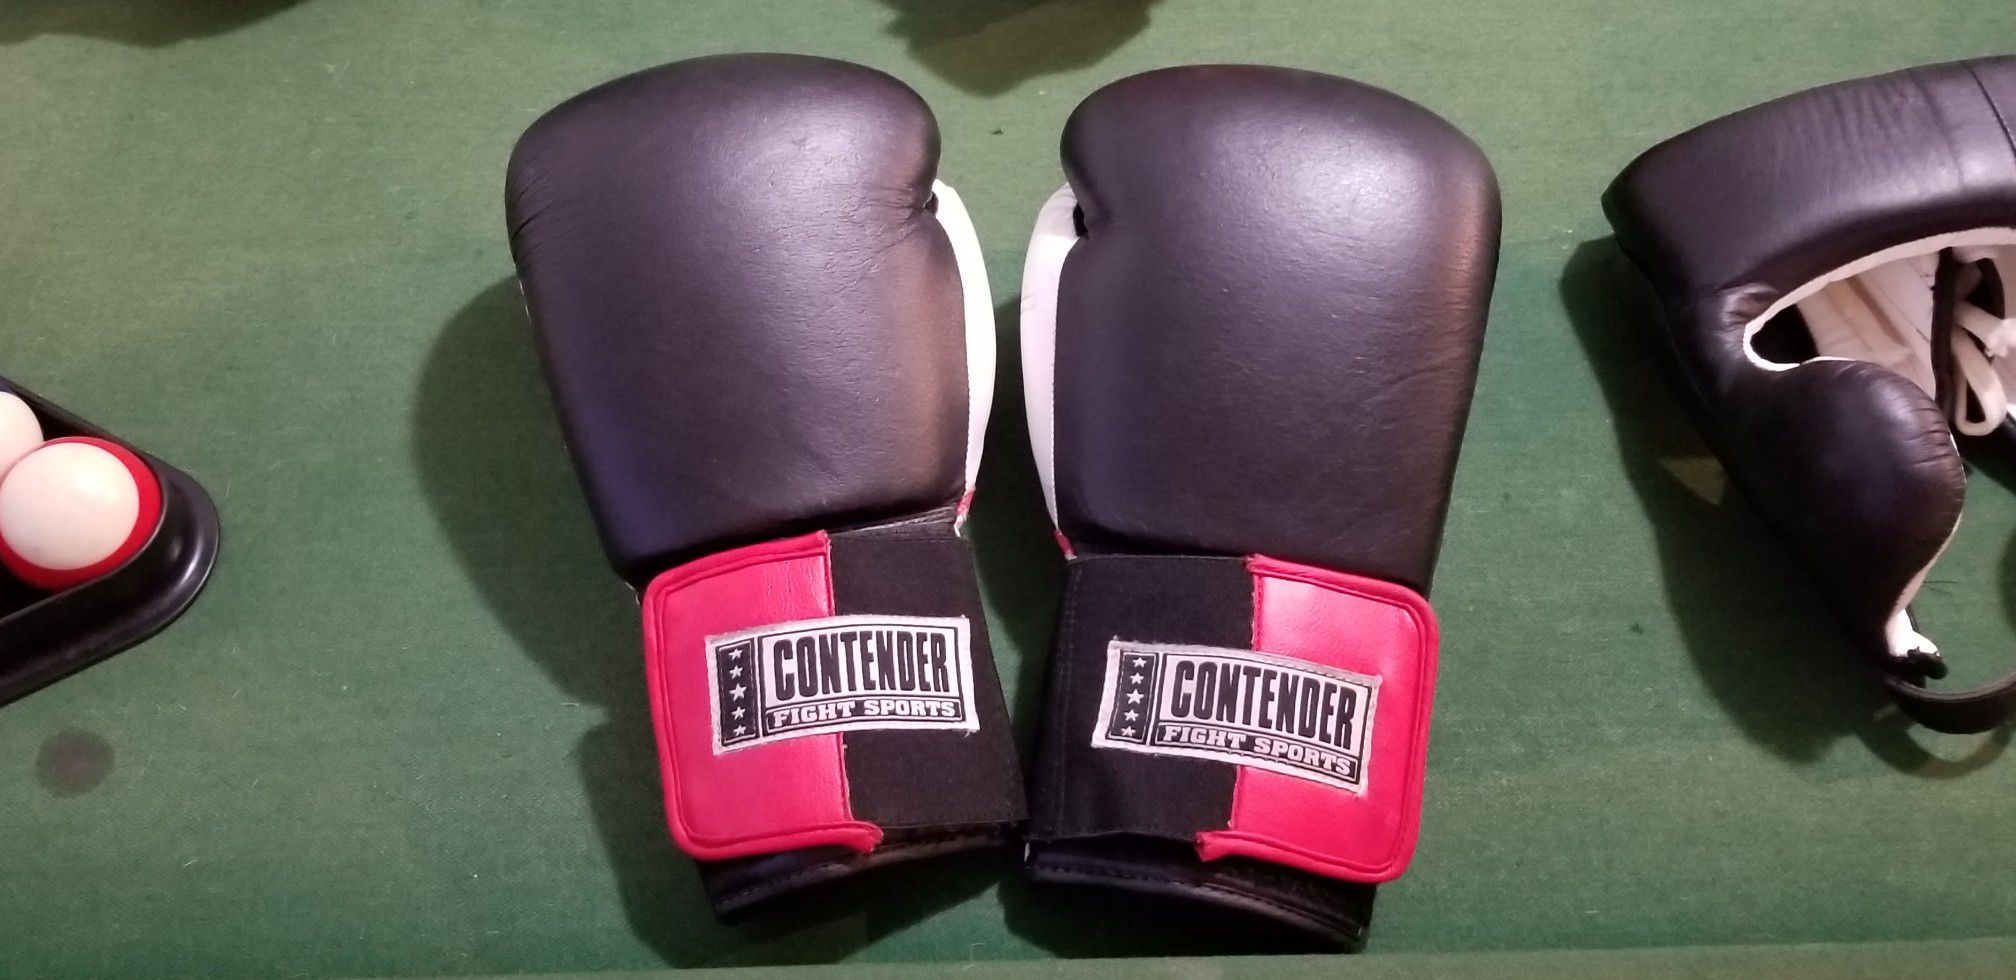 Contender boxing gloves